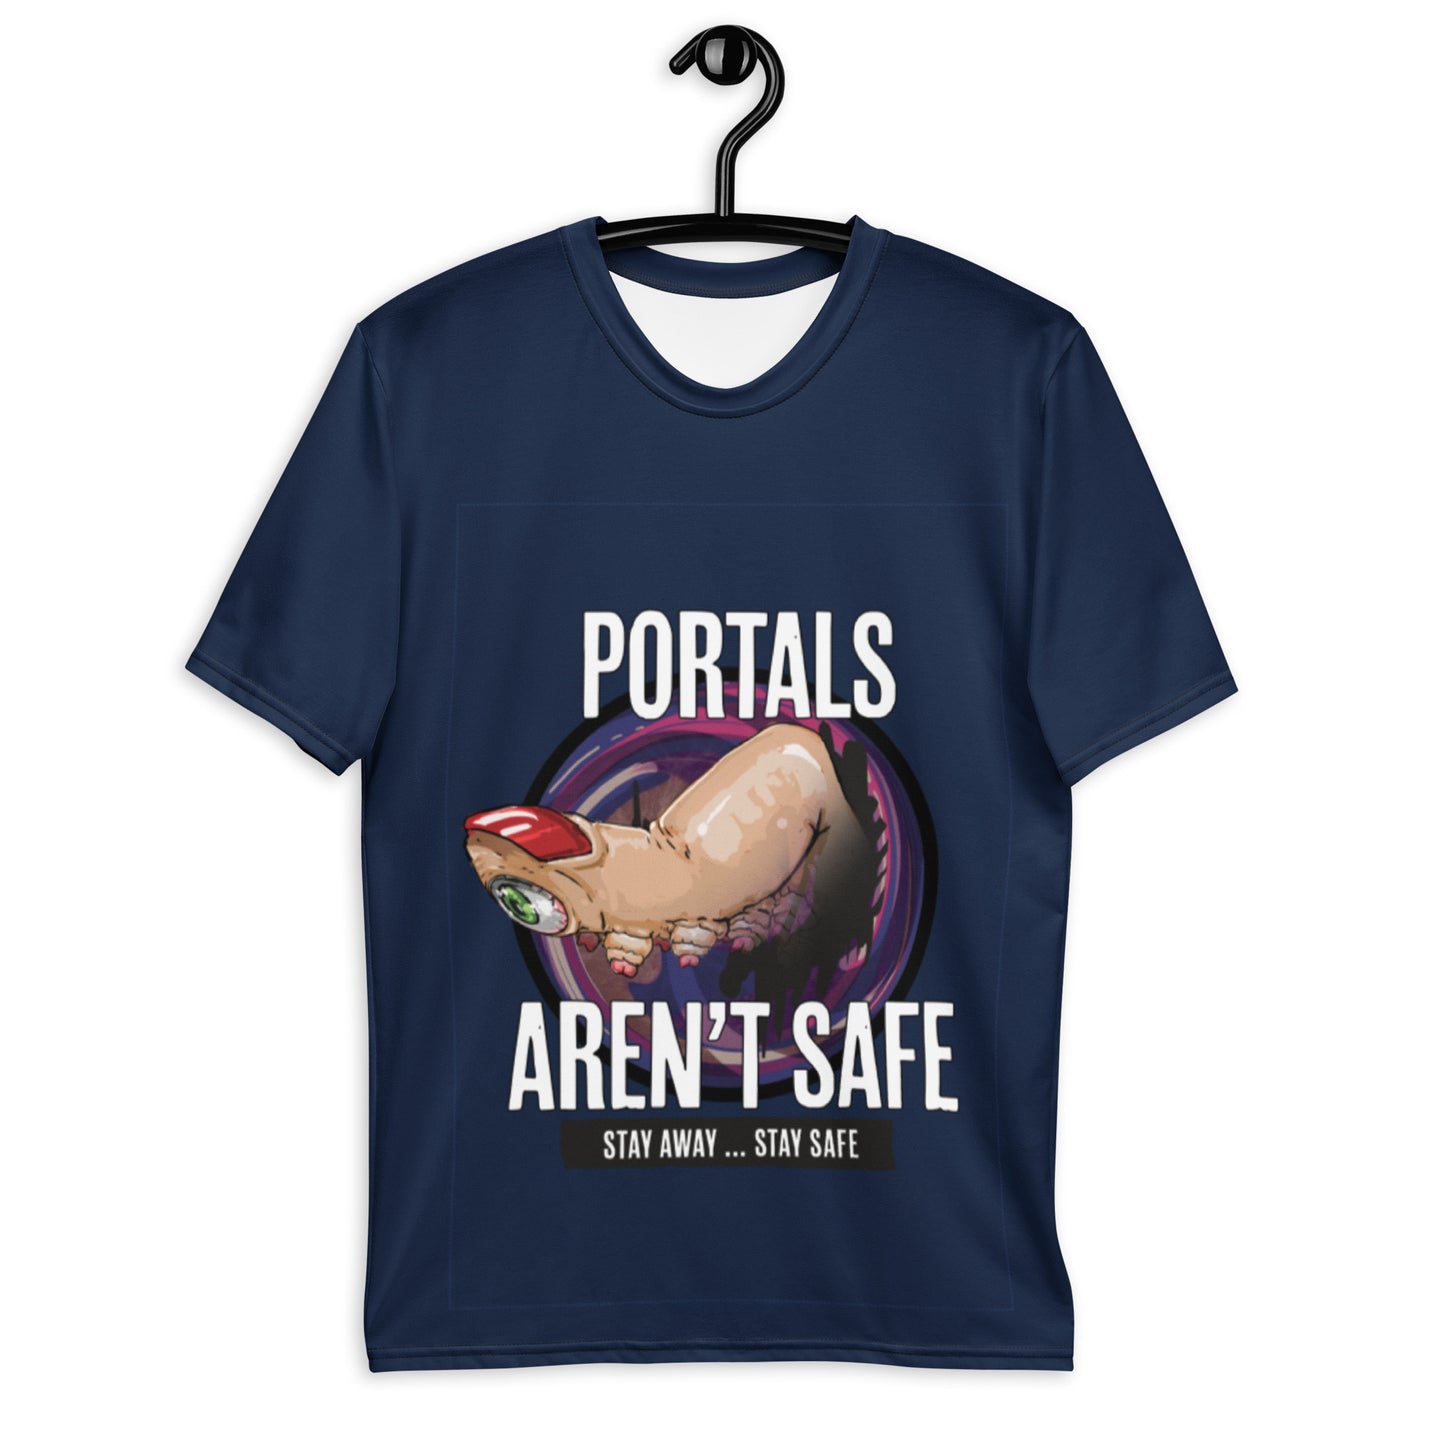 Portals aren't safe T-shirt